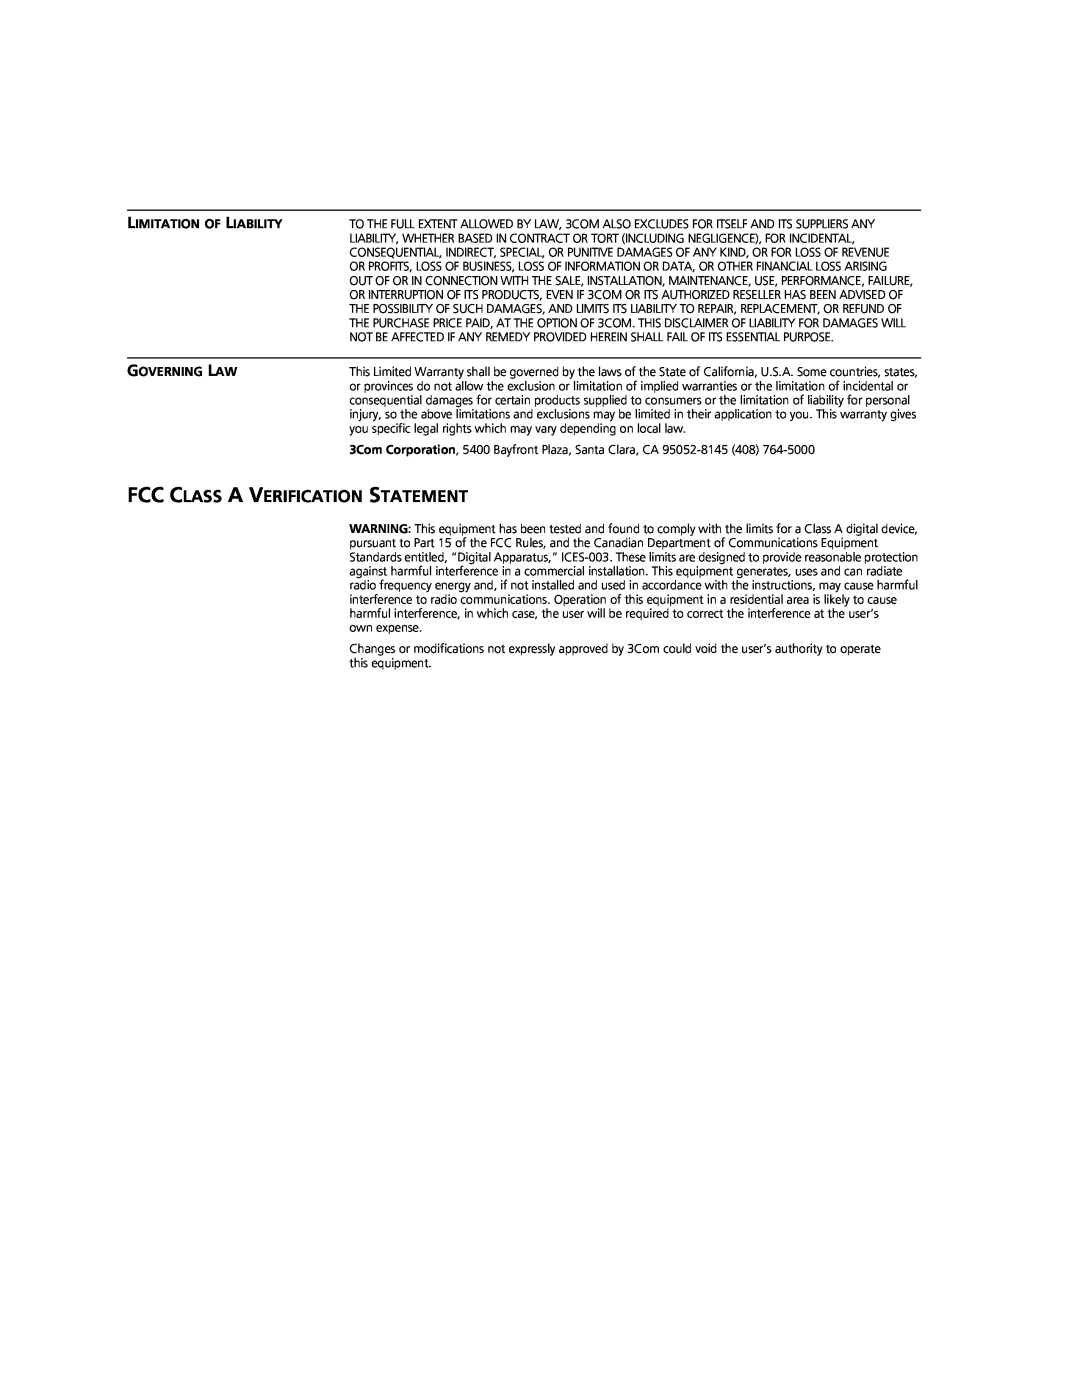 3Com Hub 1000 SX manual Fcc Class A Verification Statement, Limitation Of Liability, Governing Law 